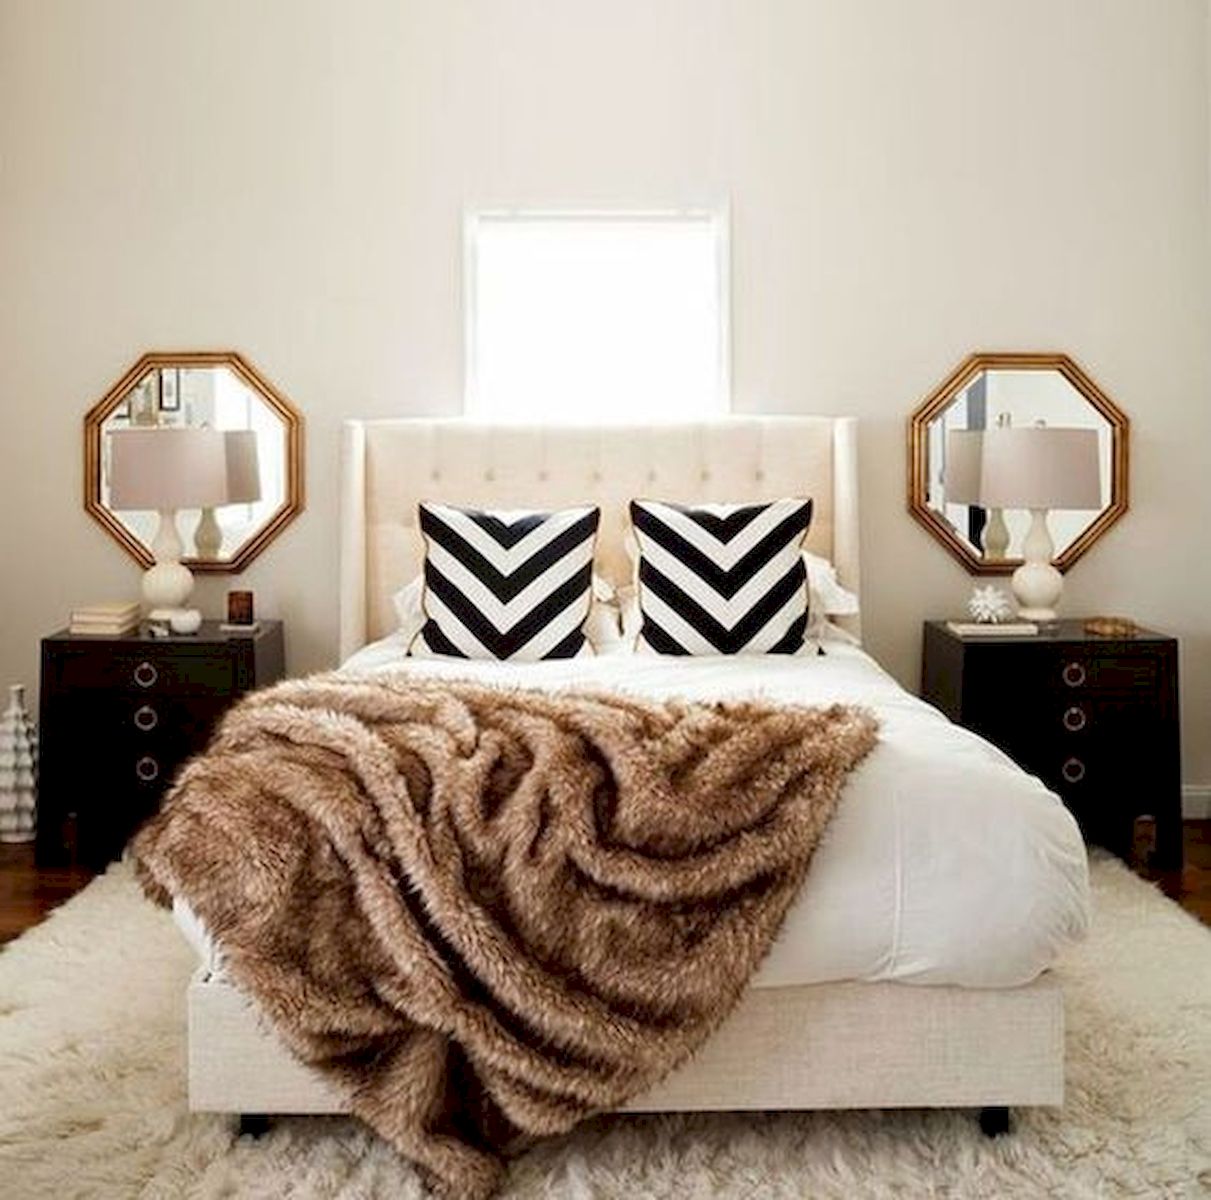 50 Amazing Modern Bedroom Decoration Ideas With Luxury Design (21)